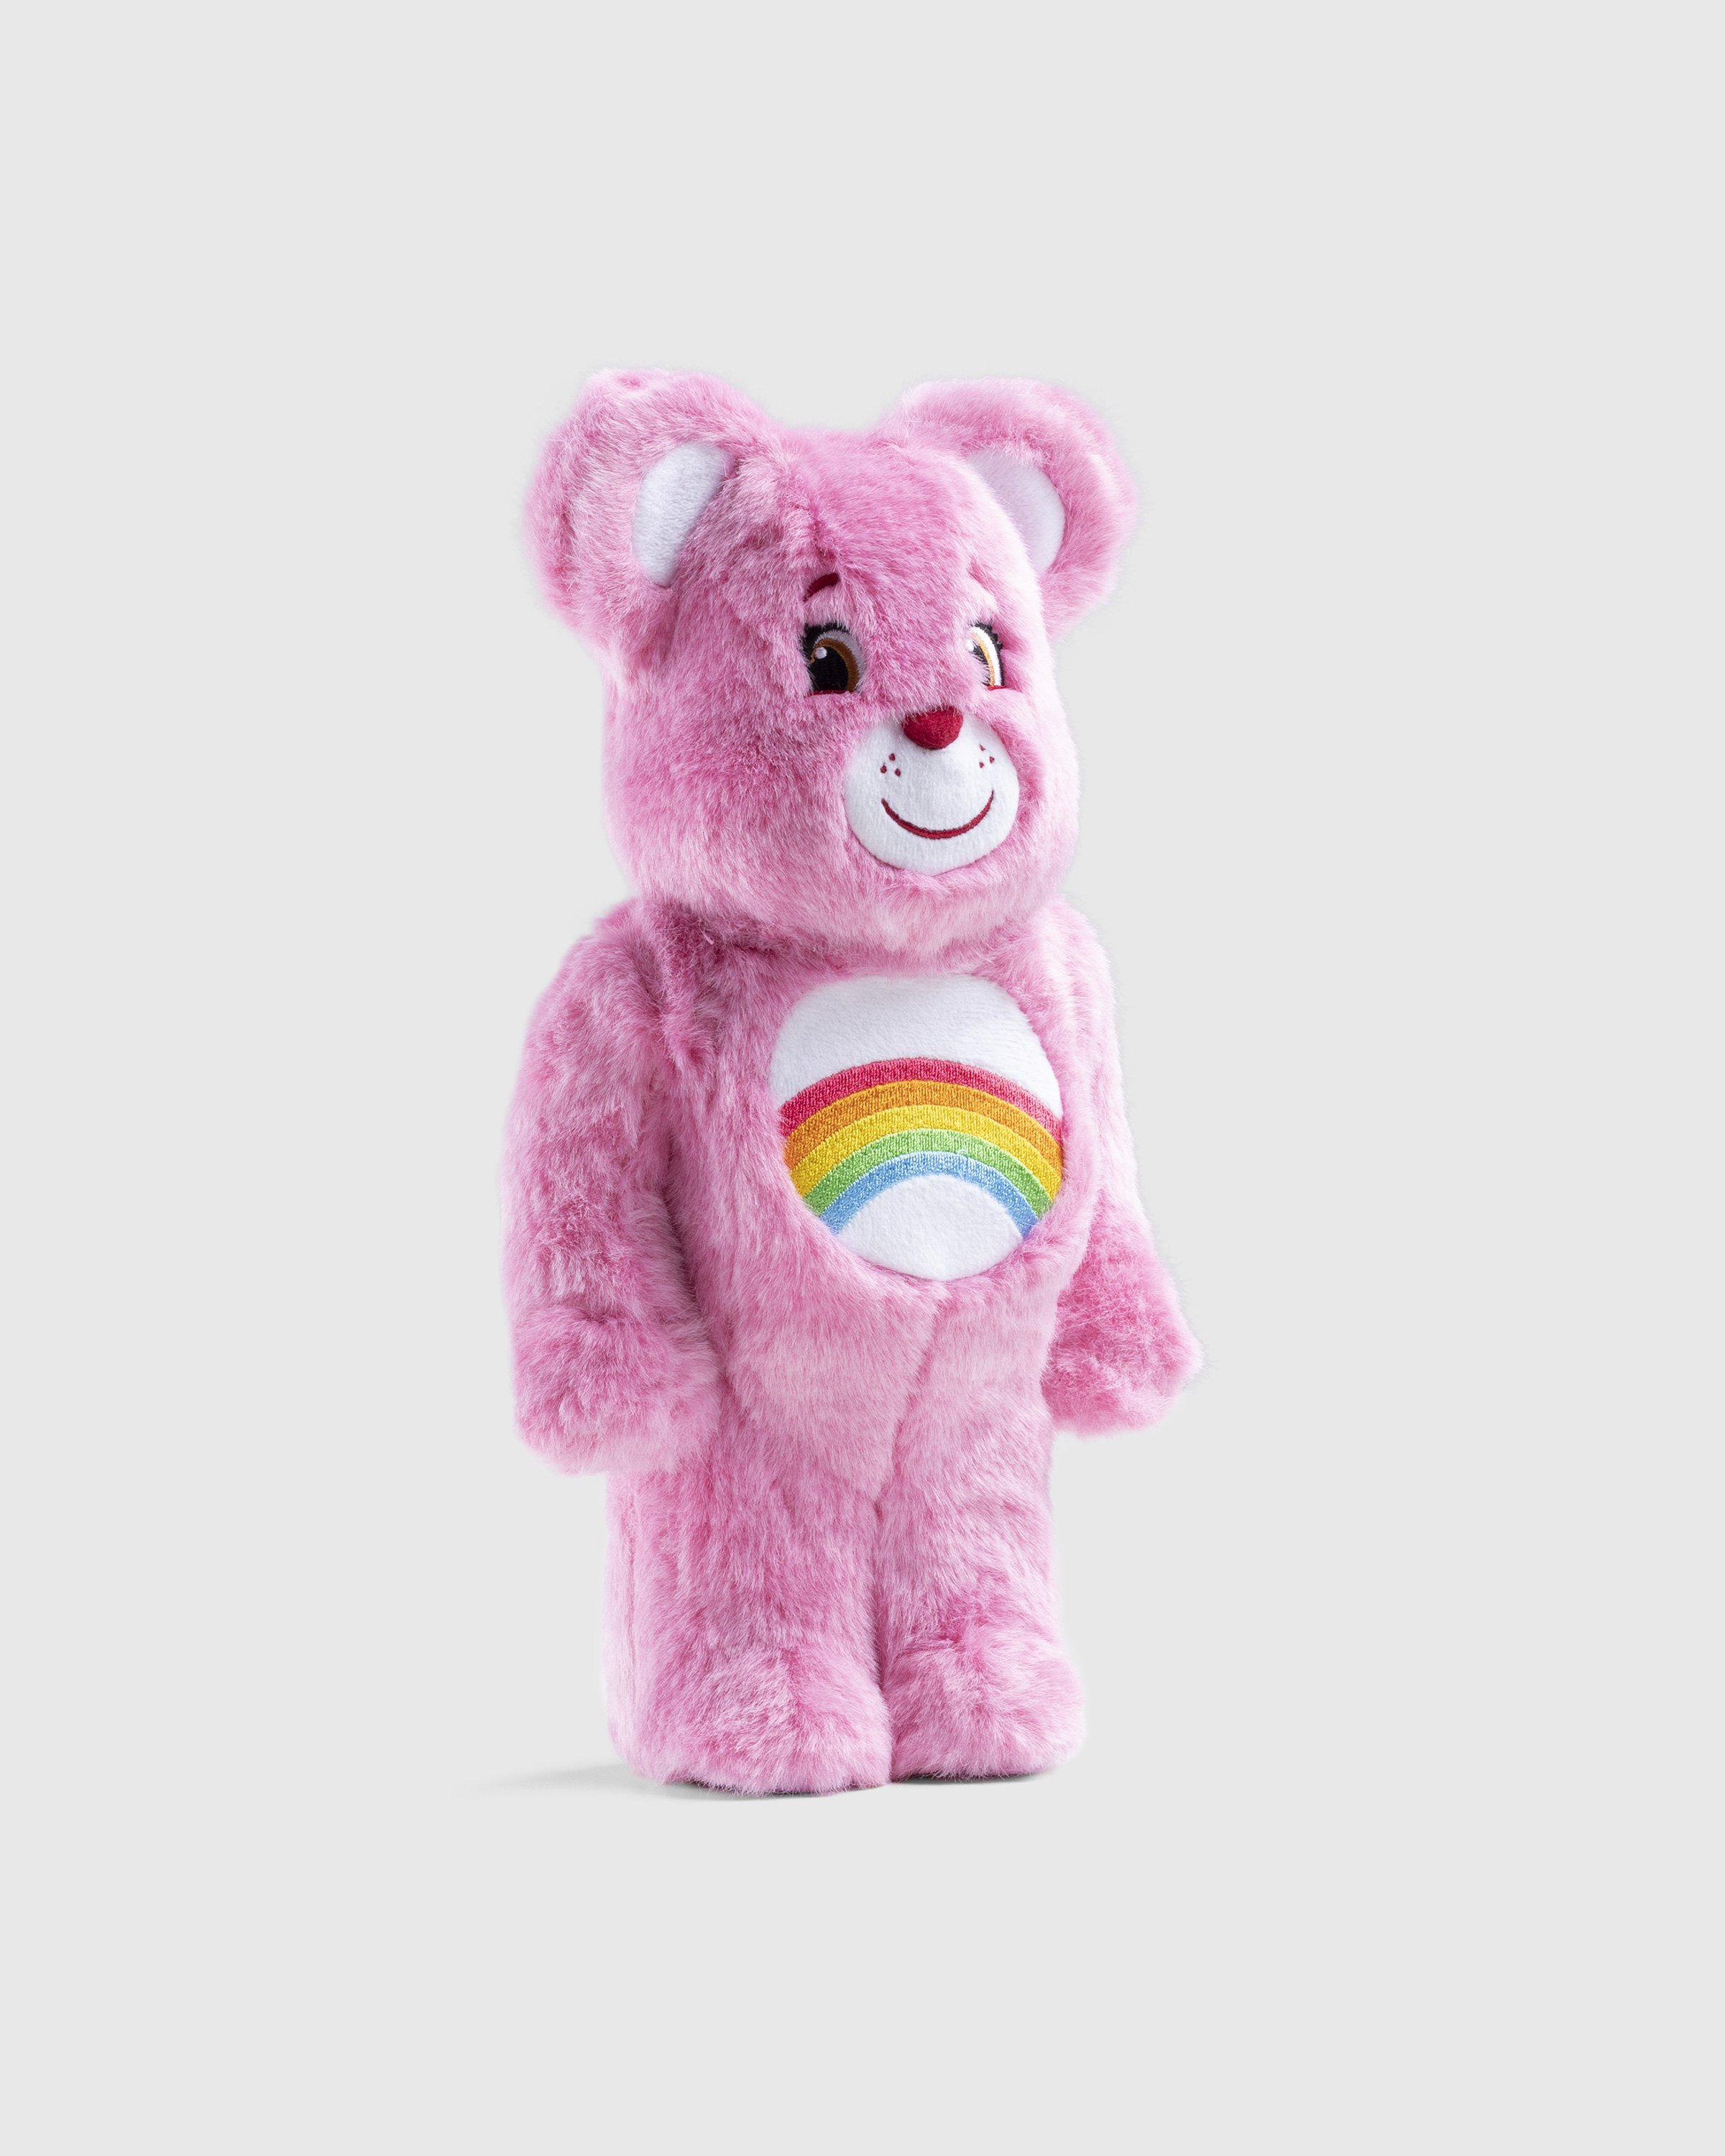 Medicom - Be@rbrick Cheer Bear Costume Version 400% Pink - Lifestyle - Pink - Image 3